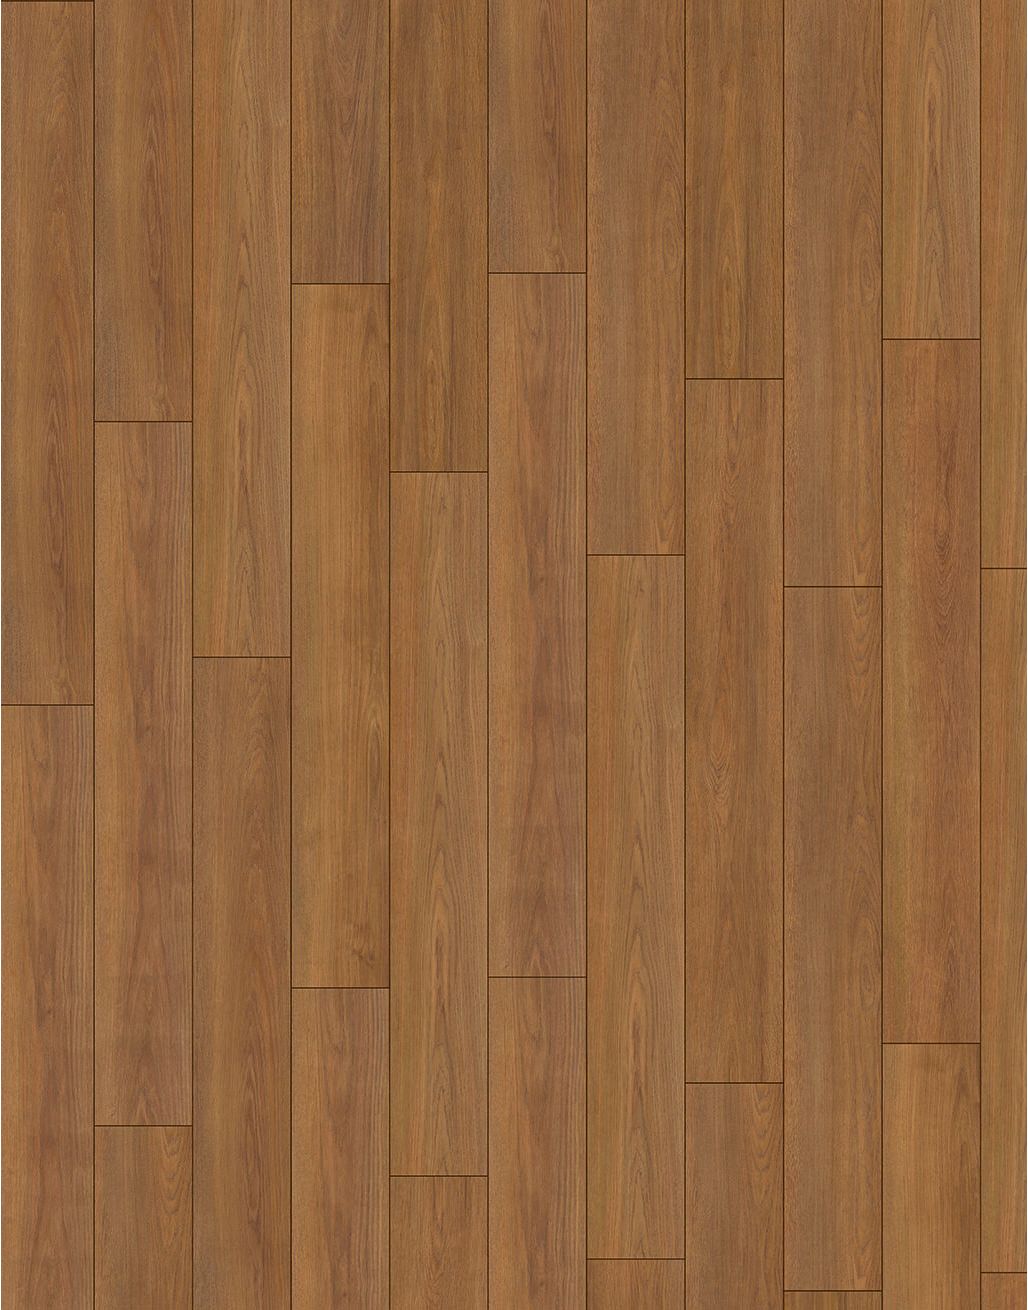 Loft - Toffee Oak Laminate Flooring 6